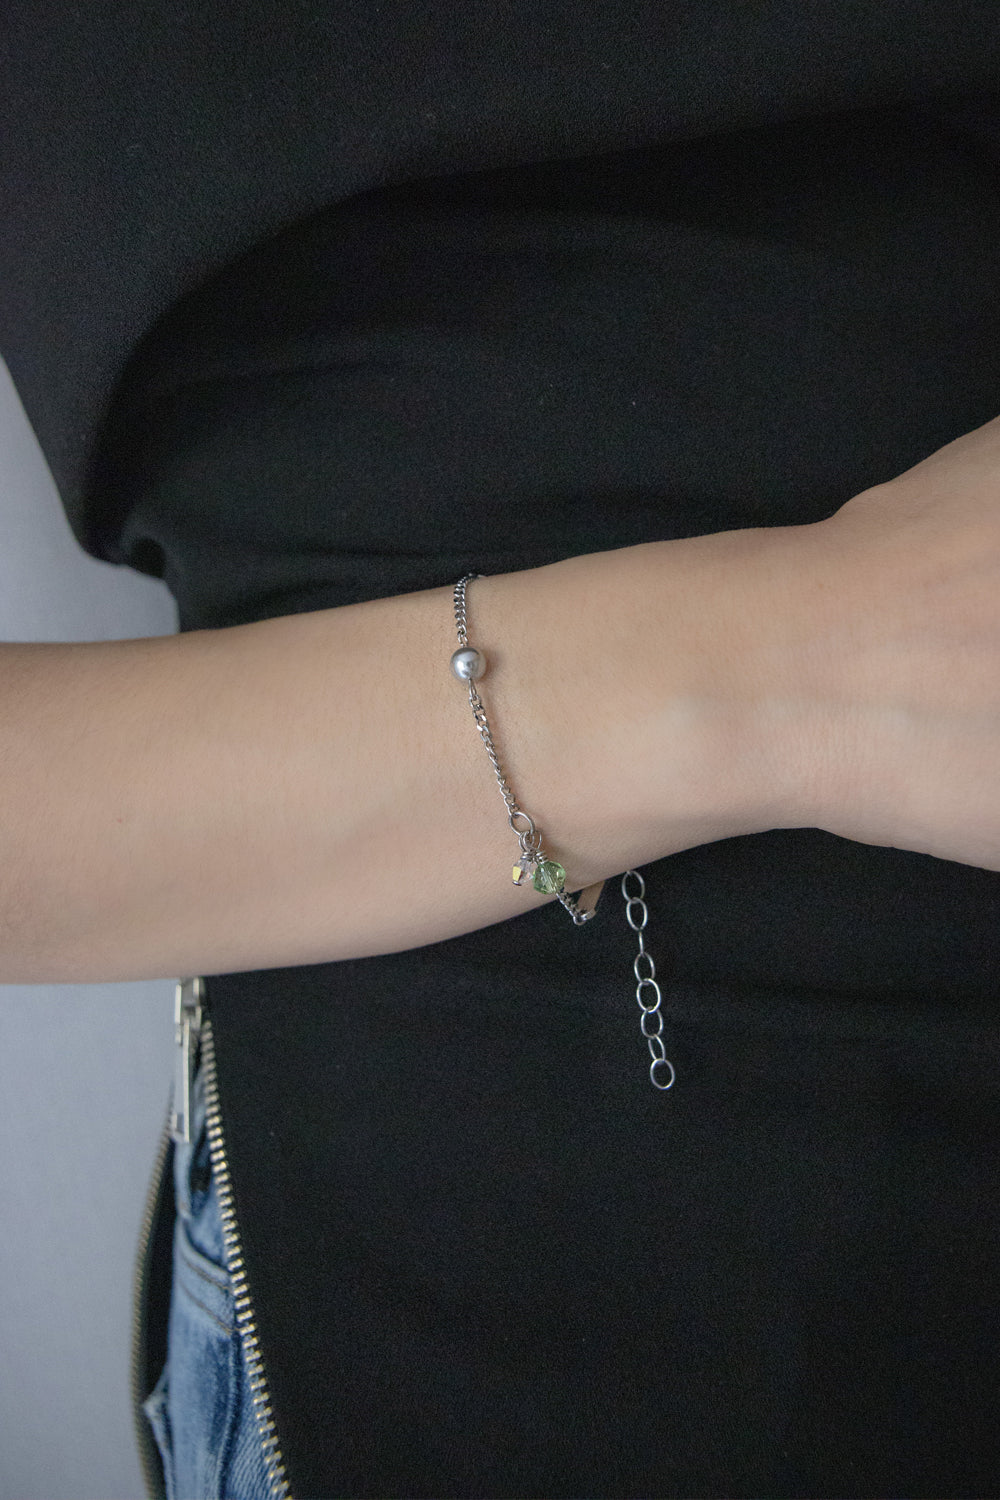 Applegreen point mix chain surgical bracelet